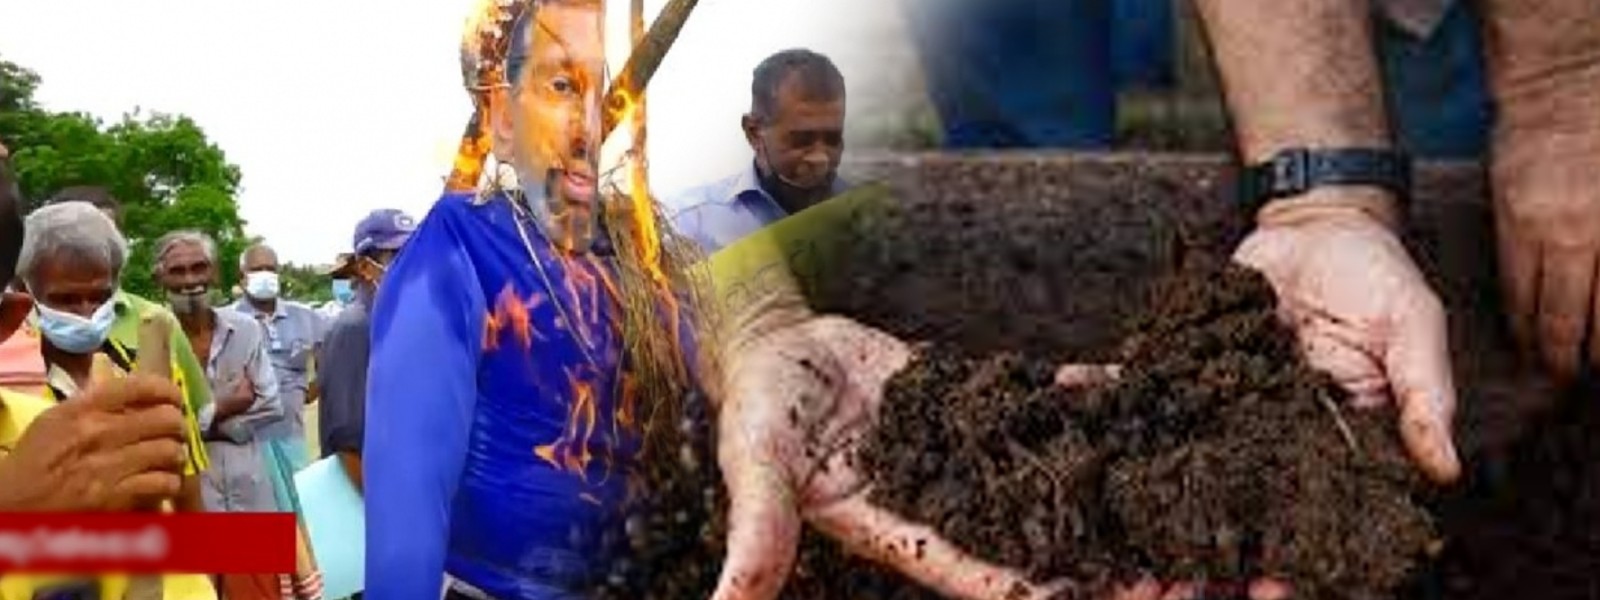 How a fertilizer ban became a part of Sri Lanka’s Crisis